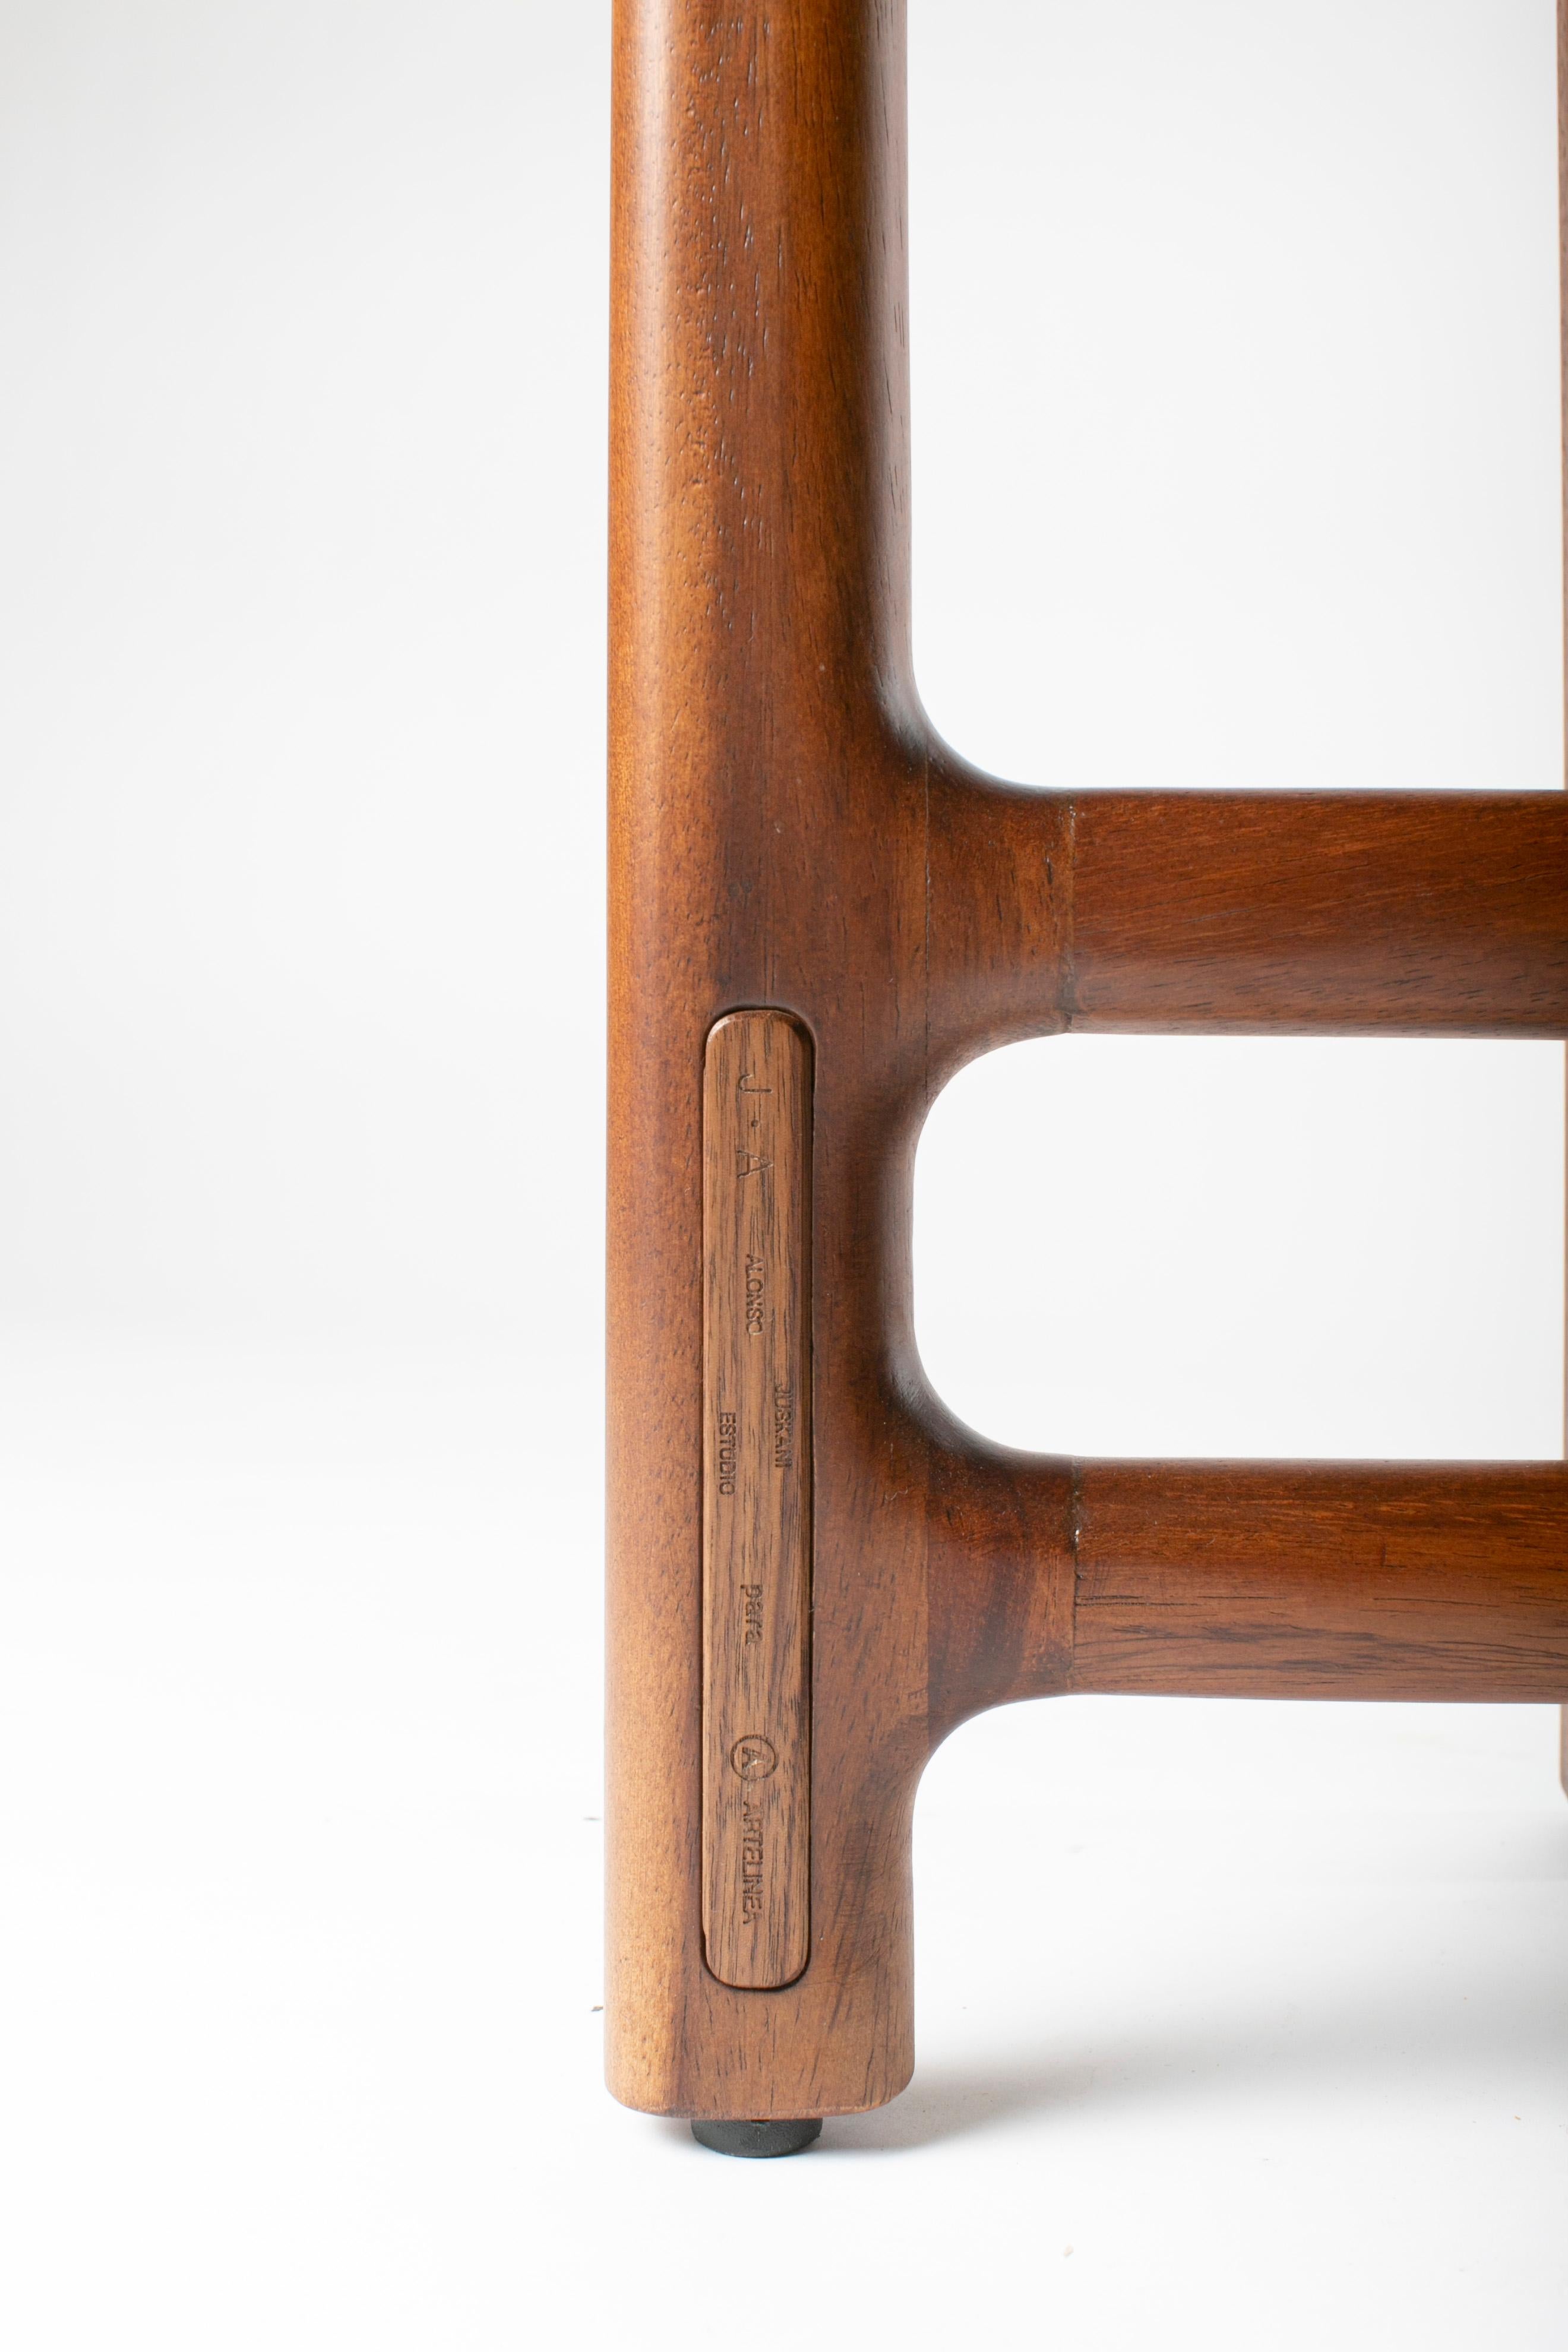 Desierto Coat rack, parota wood, Contemporary Mexican Design by Juskani Alonso For Sale 2